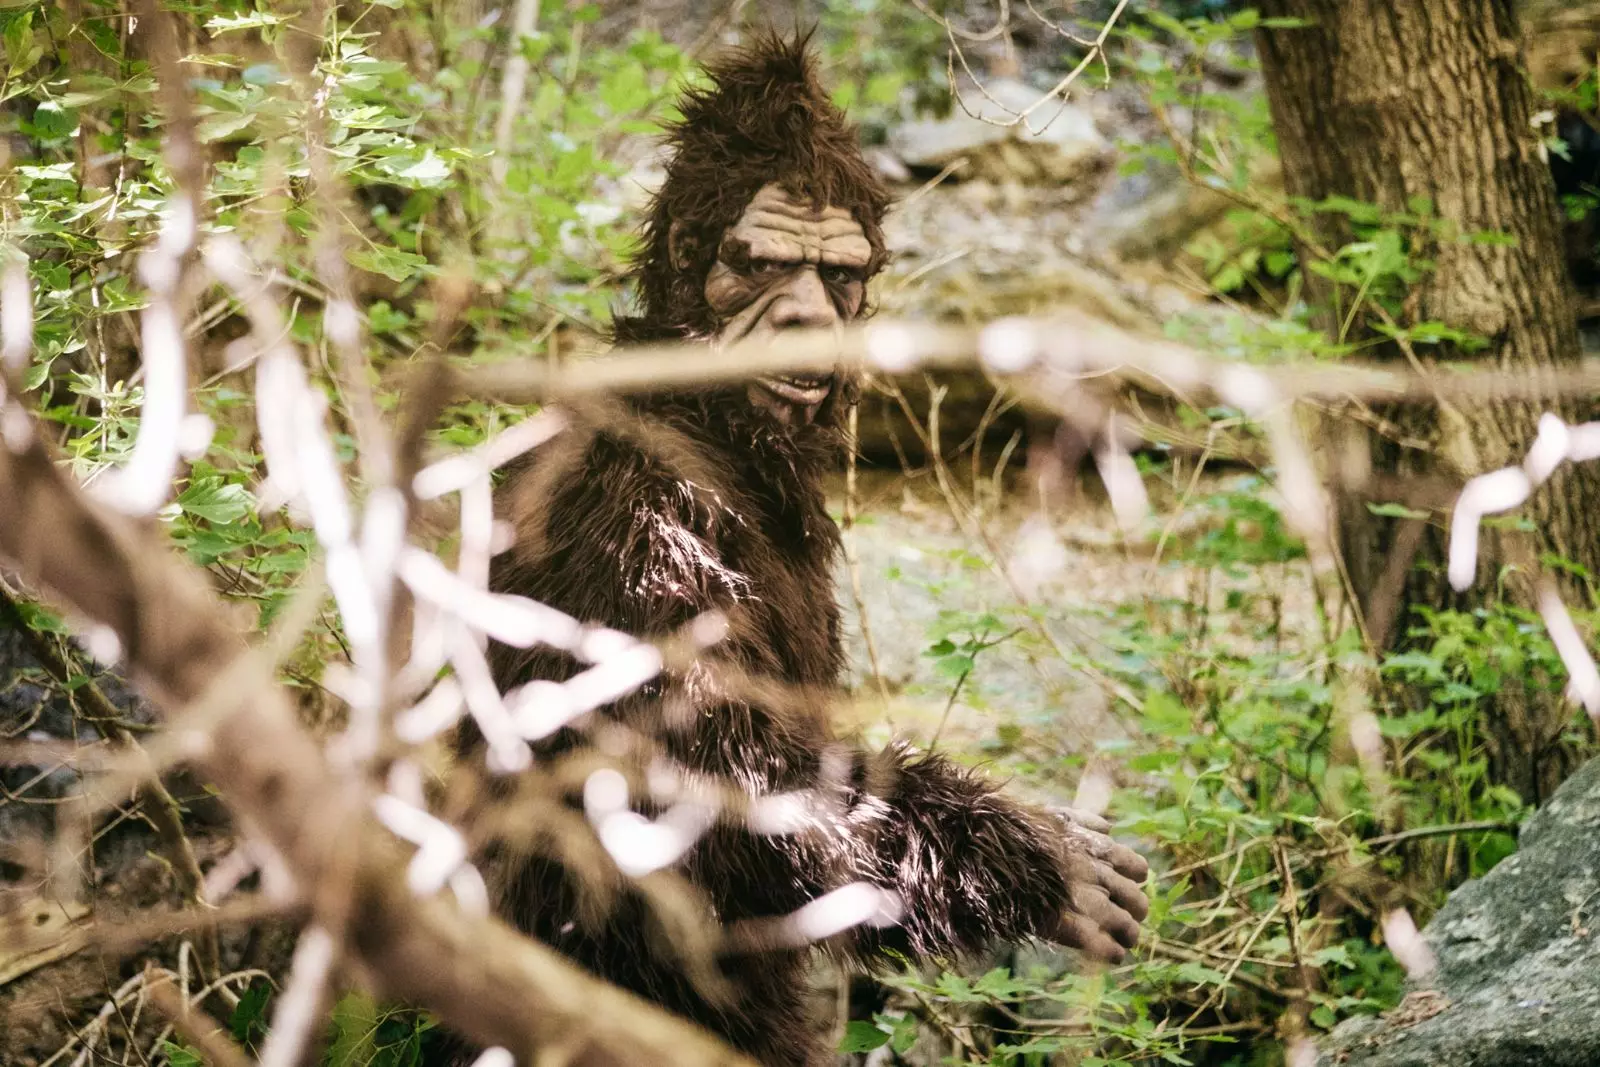 Bigfoot's a fan of Washington, sightings suggest - Axios Seattle